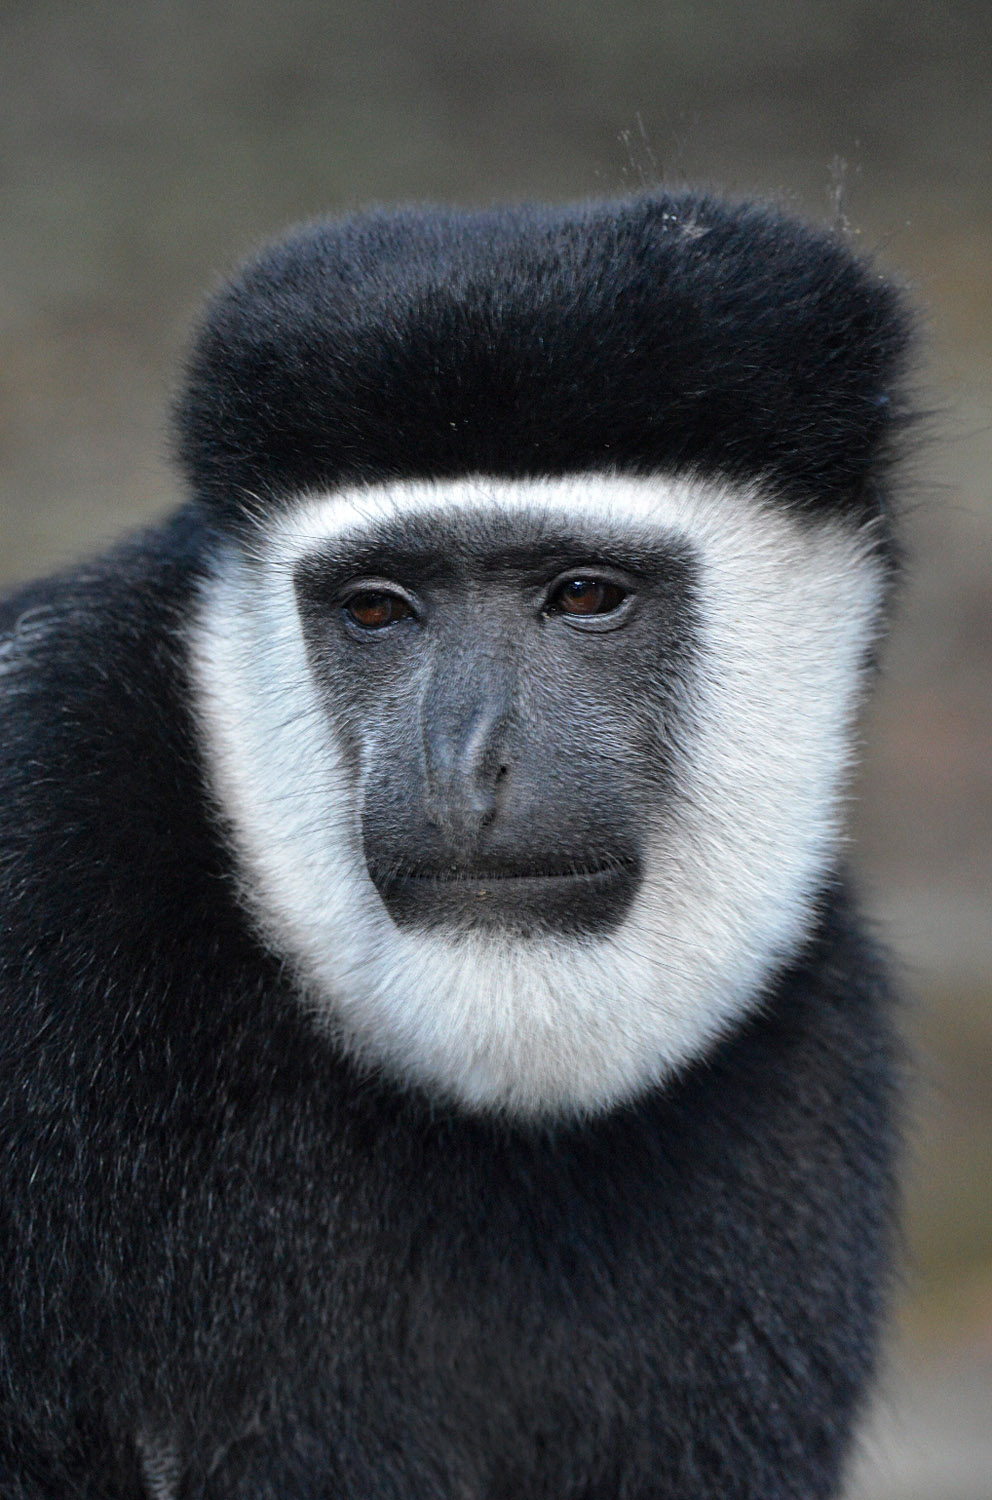 Abyssinian Black-and-white Colobus monkey, lago Awasa, lake Awasa